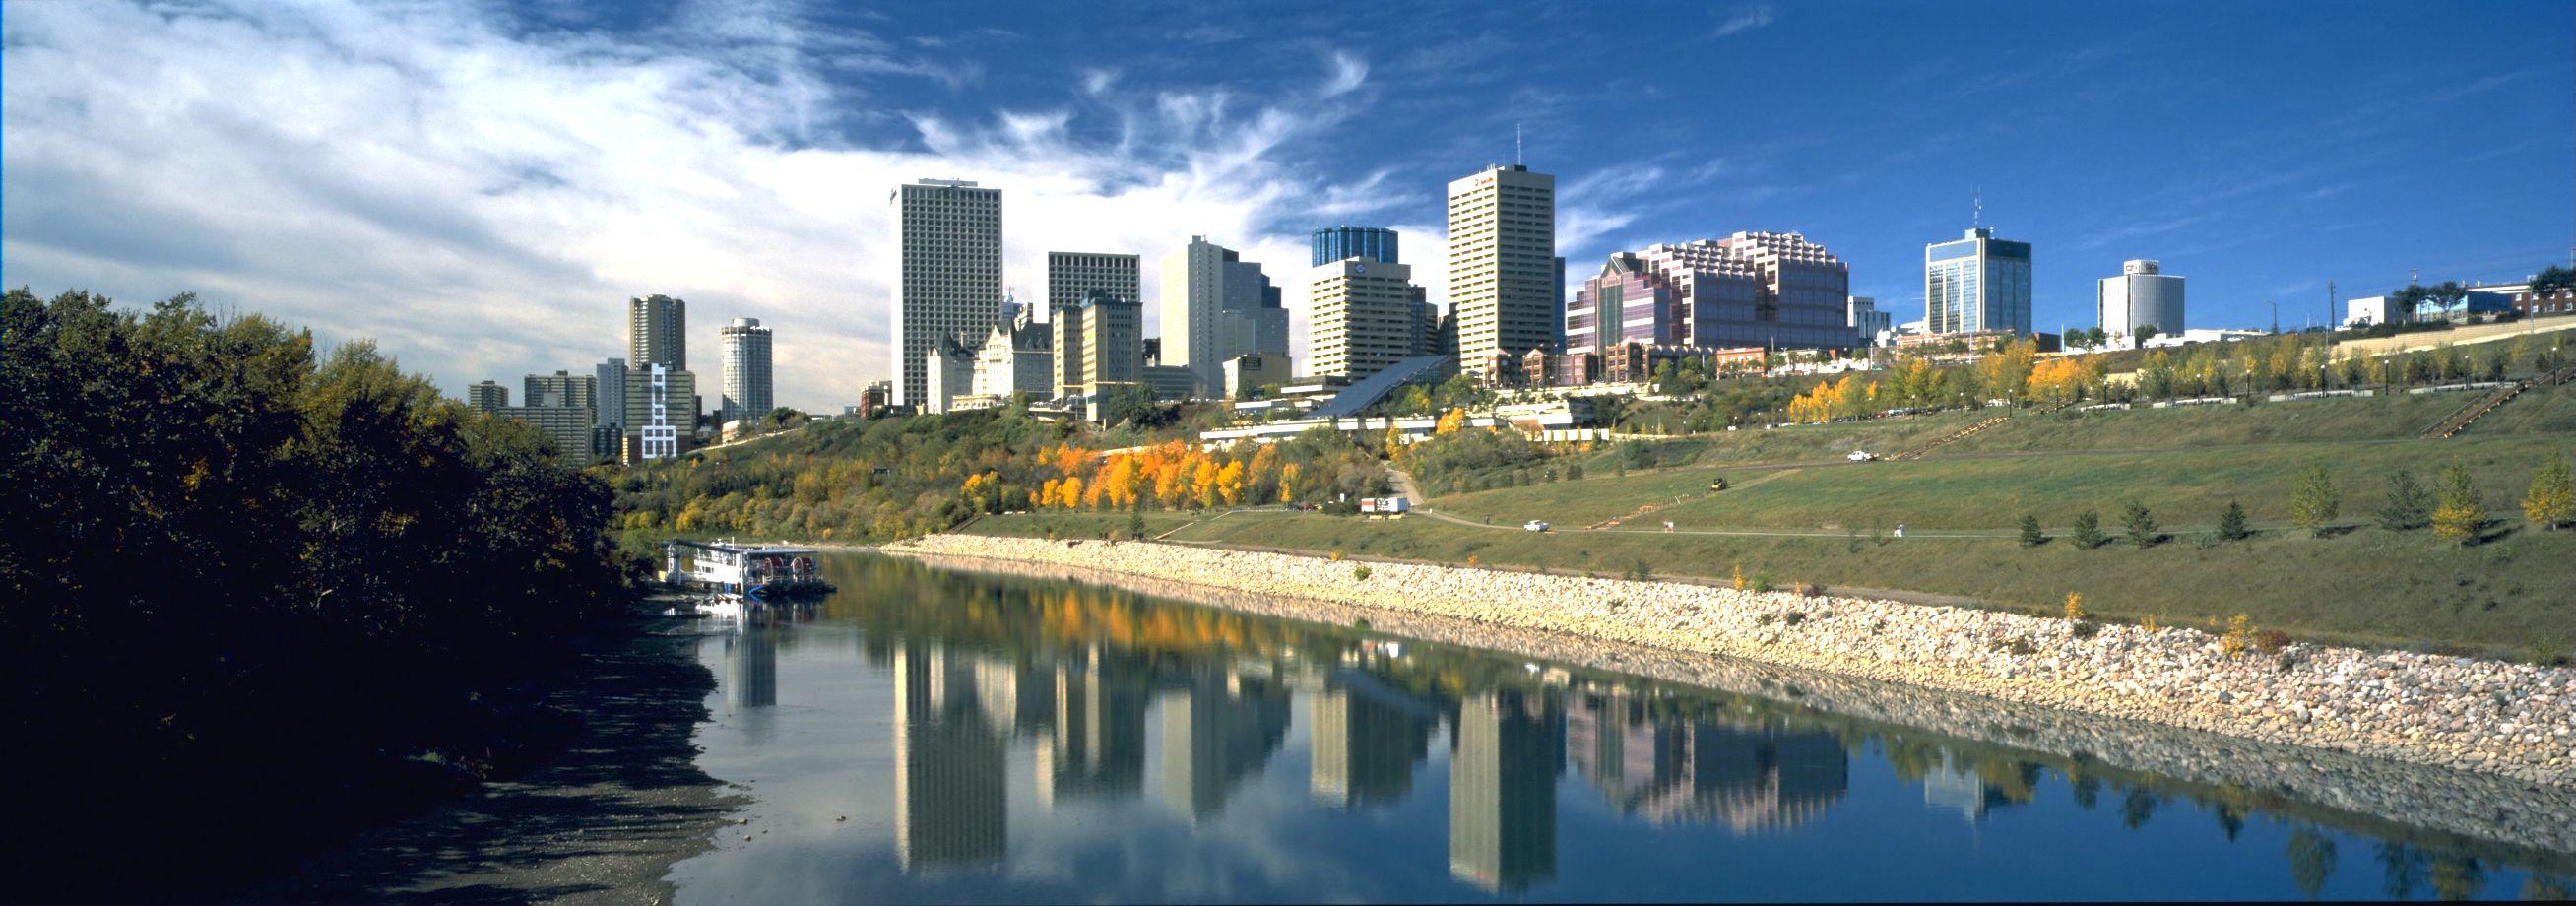 Copy of City of Edmonton1.jpg